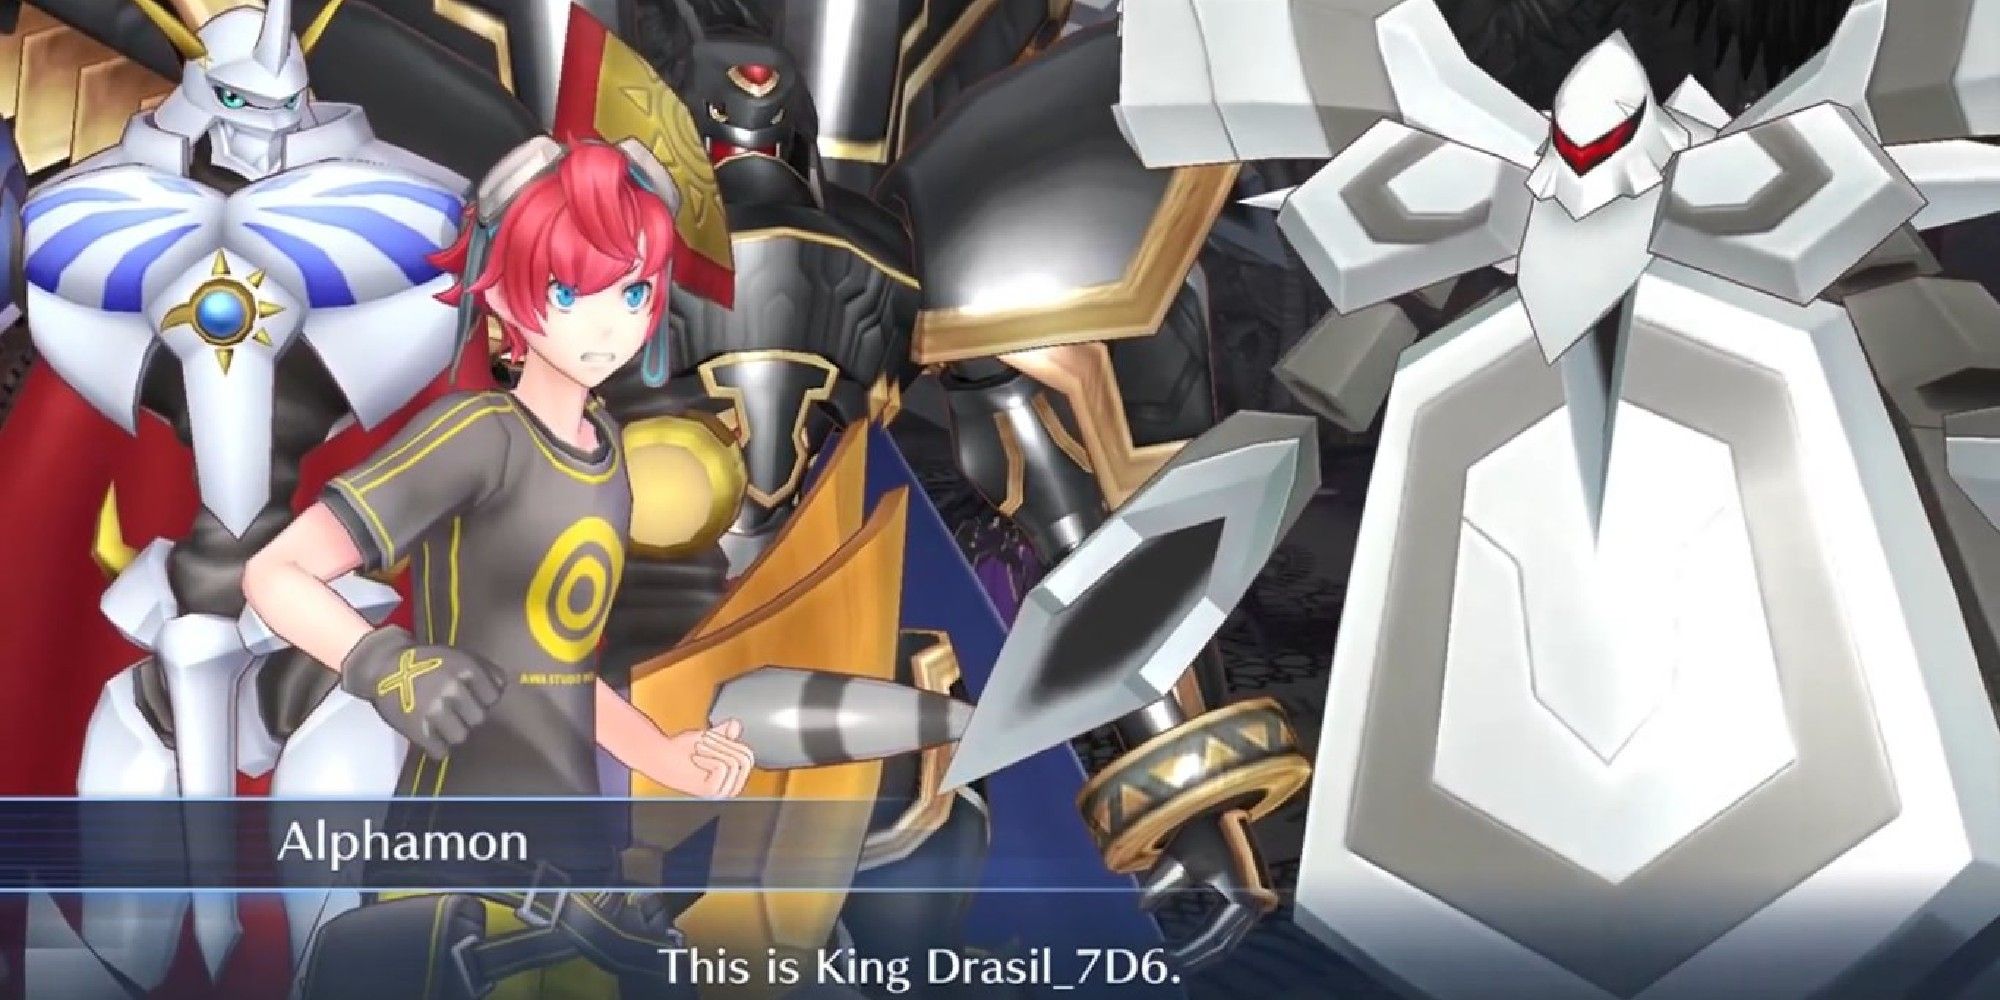 Digimon Cyber Sleuth: Facing King Drasil